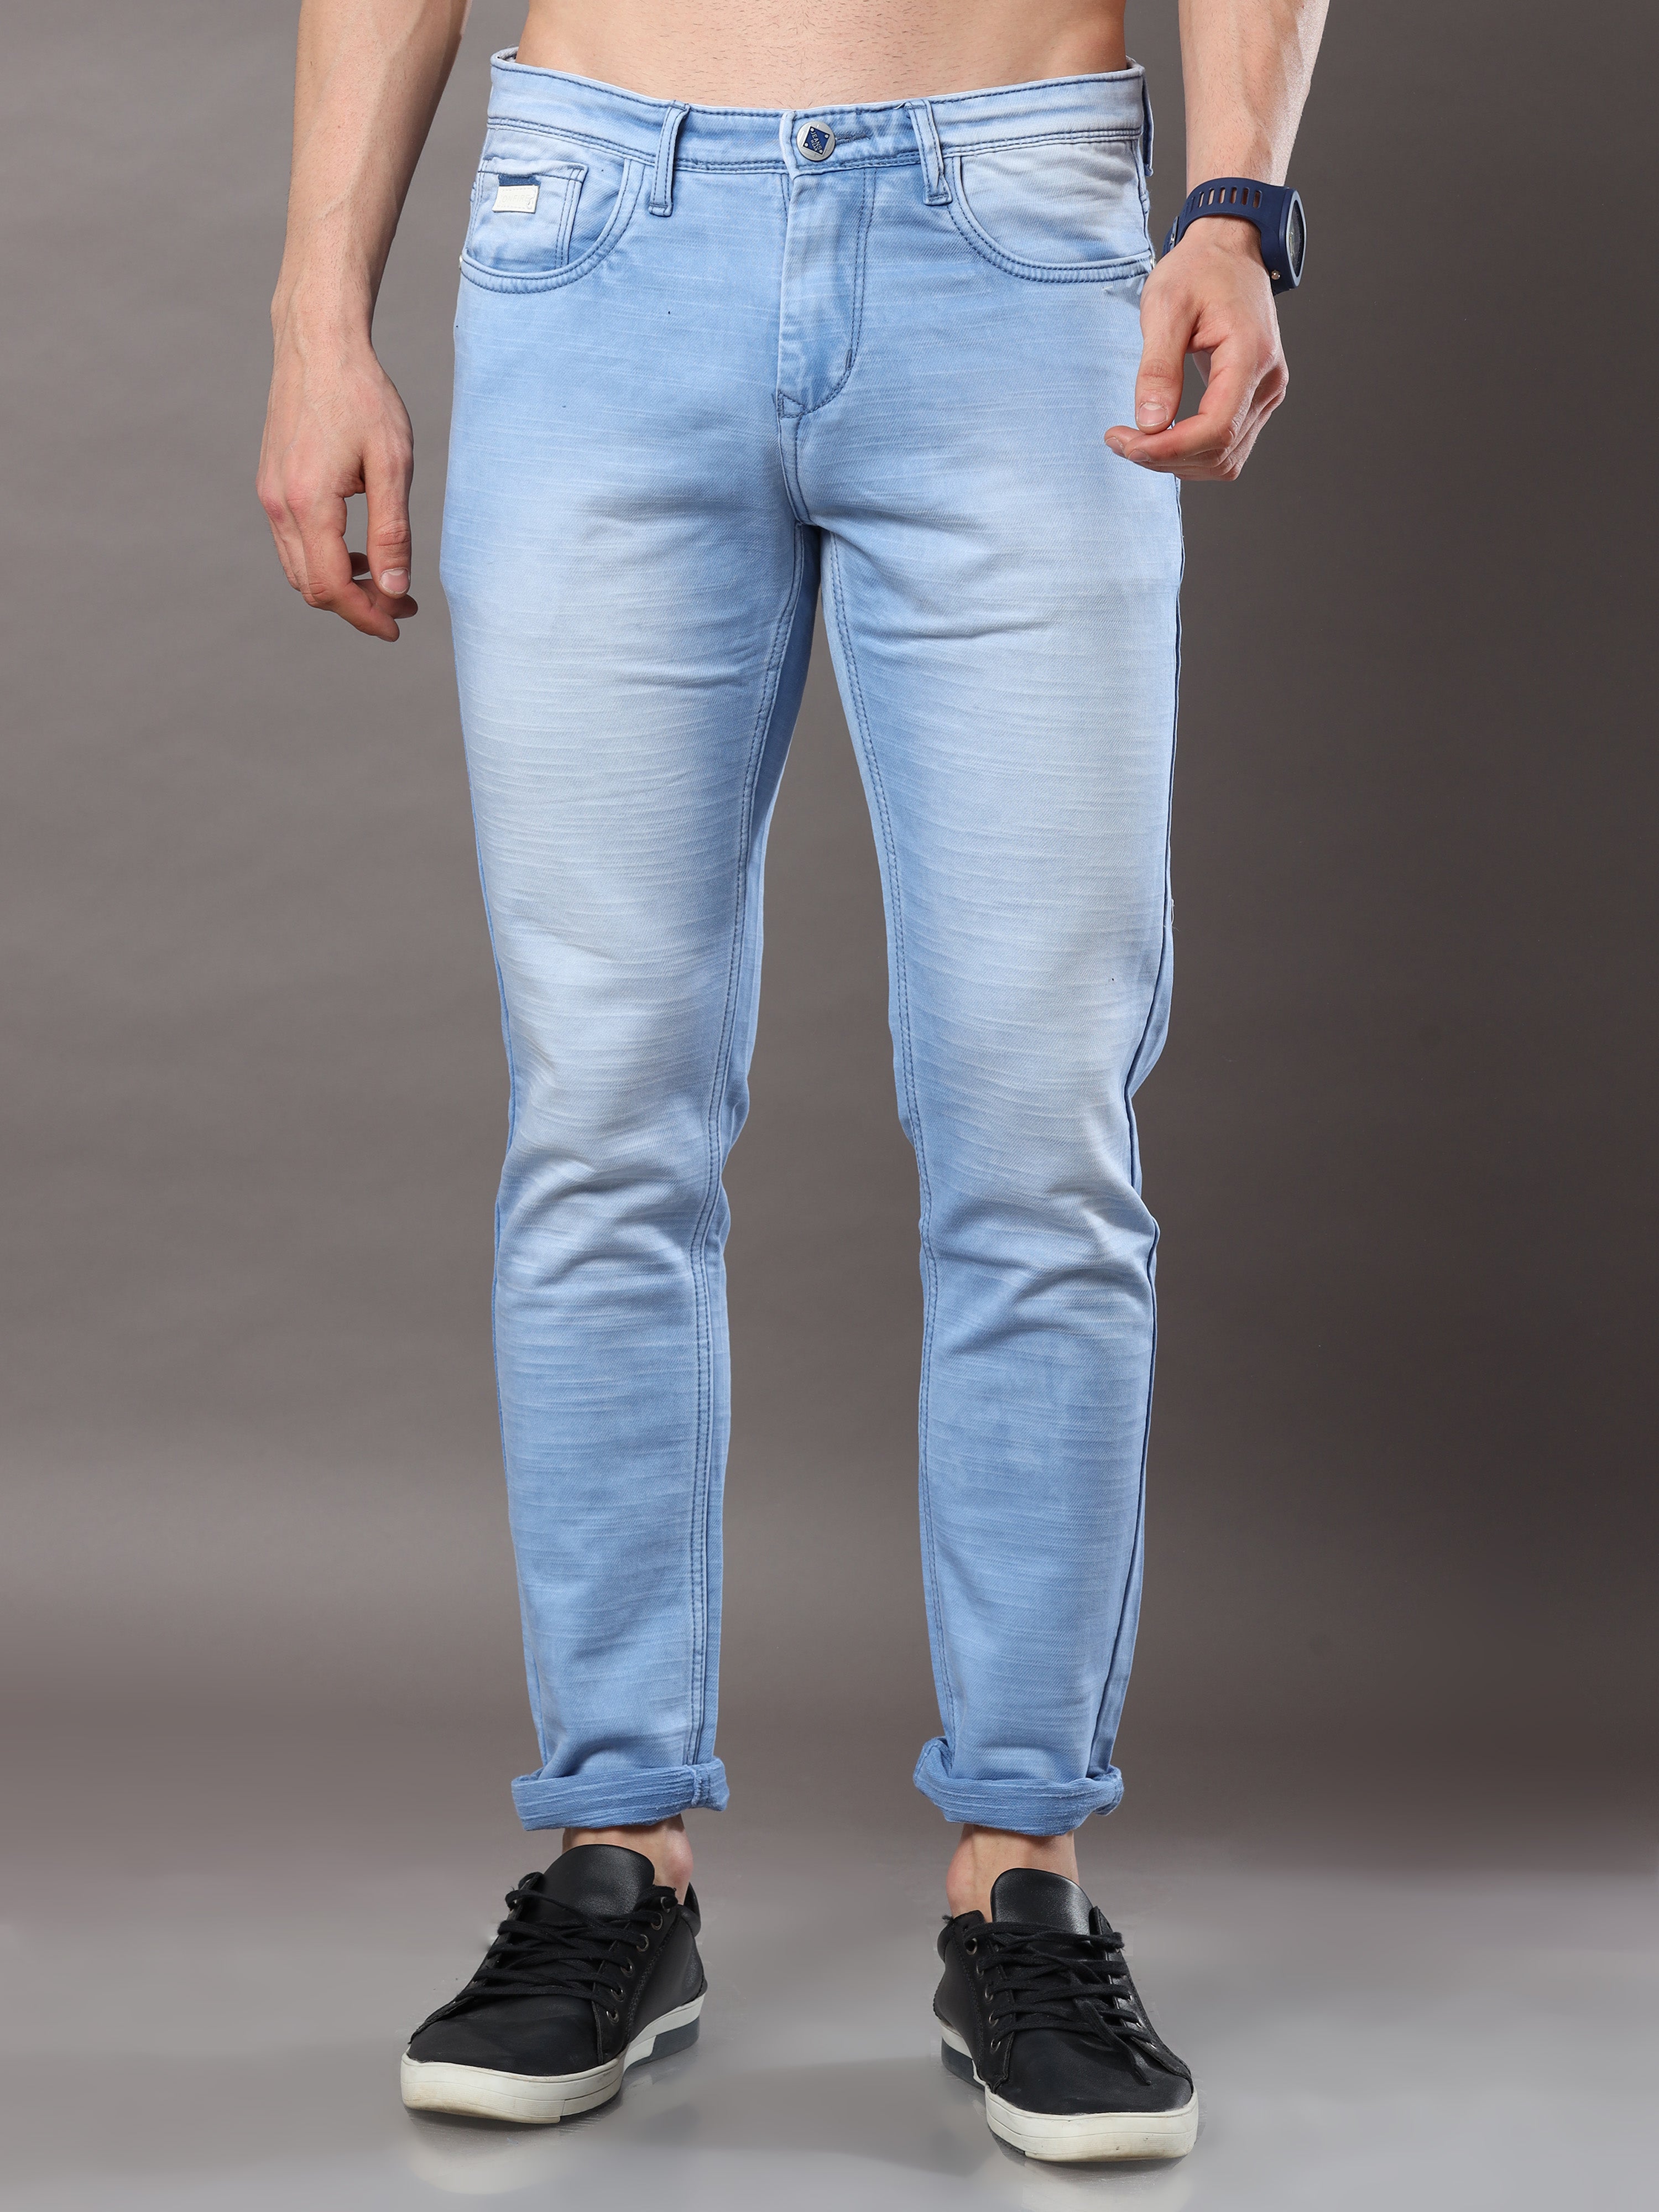 The Row | Carlisle Straight-Leg Jean in Light Blue Denim With Contrast  Stitching justoneeye.com